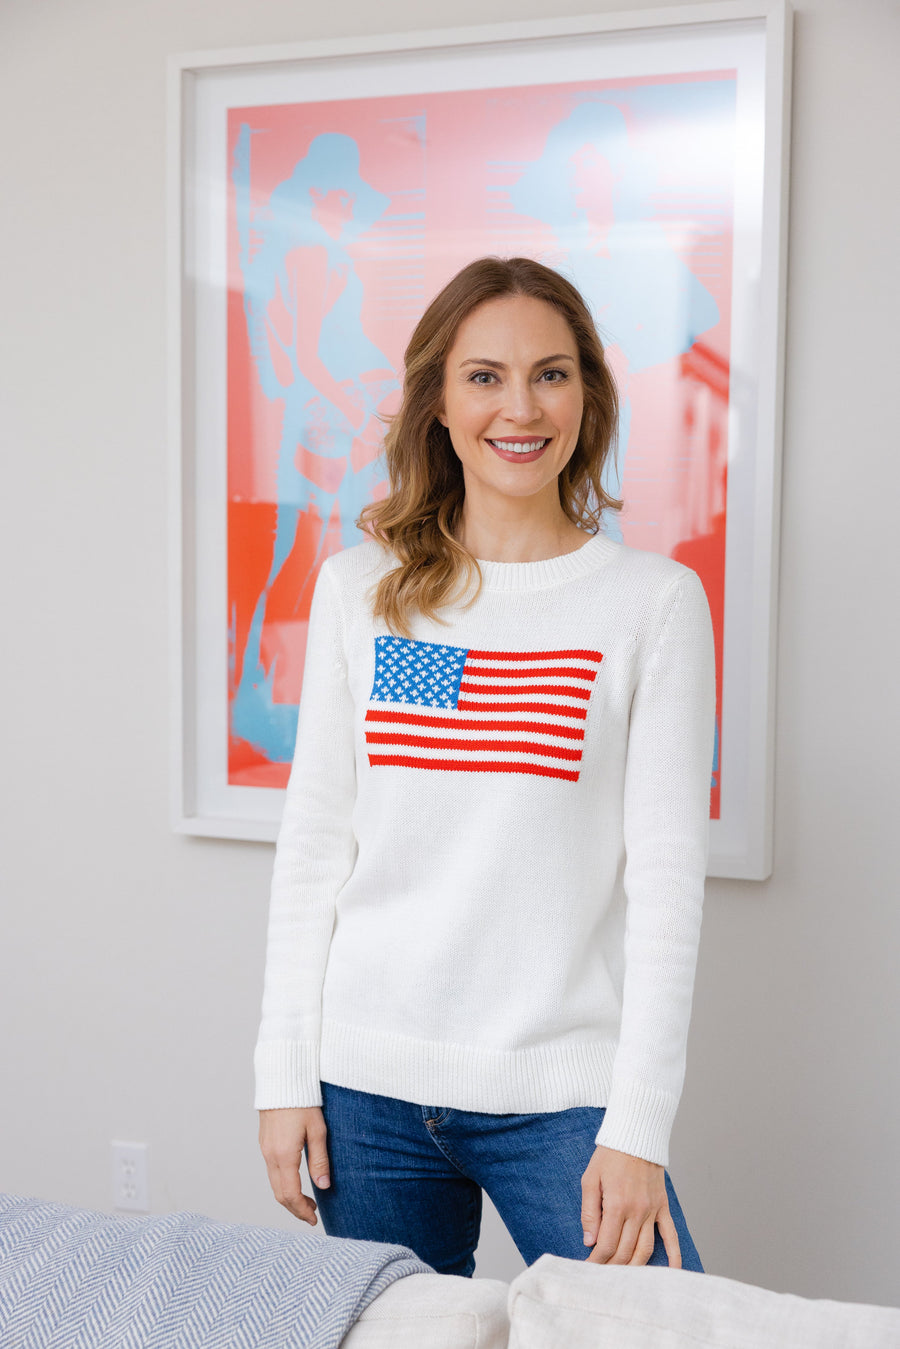 Navy American Flag Cotton Intarsia Sweater